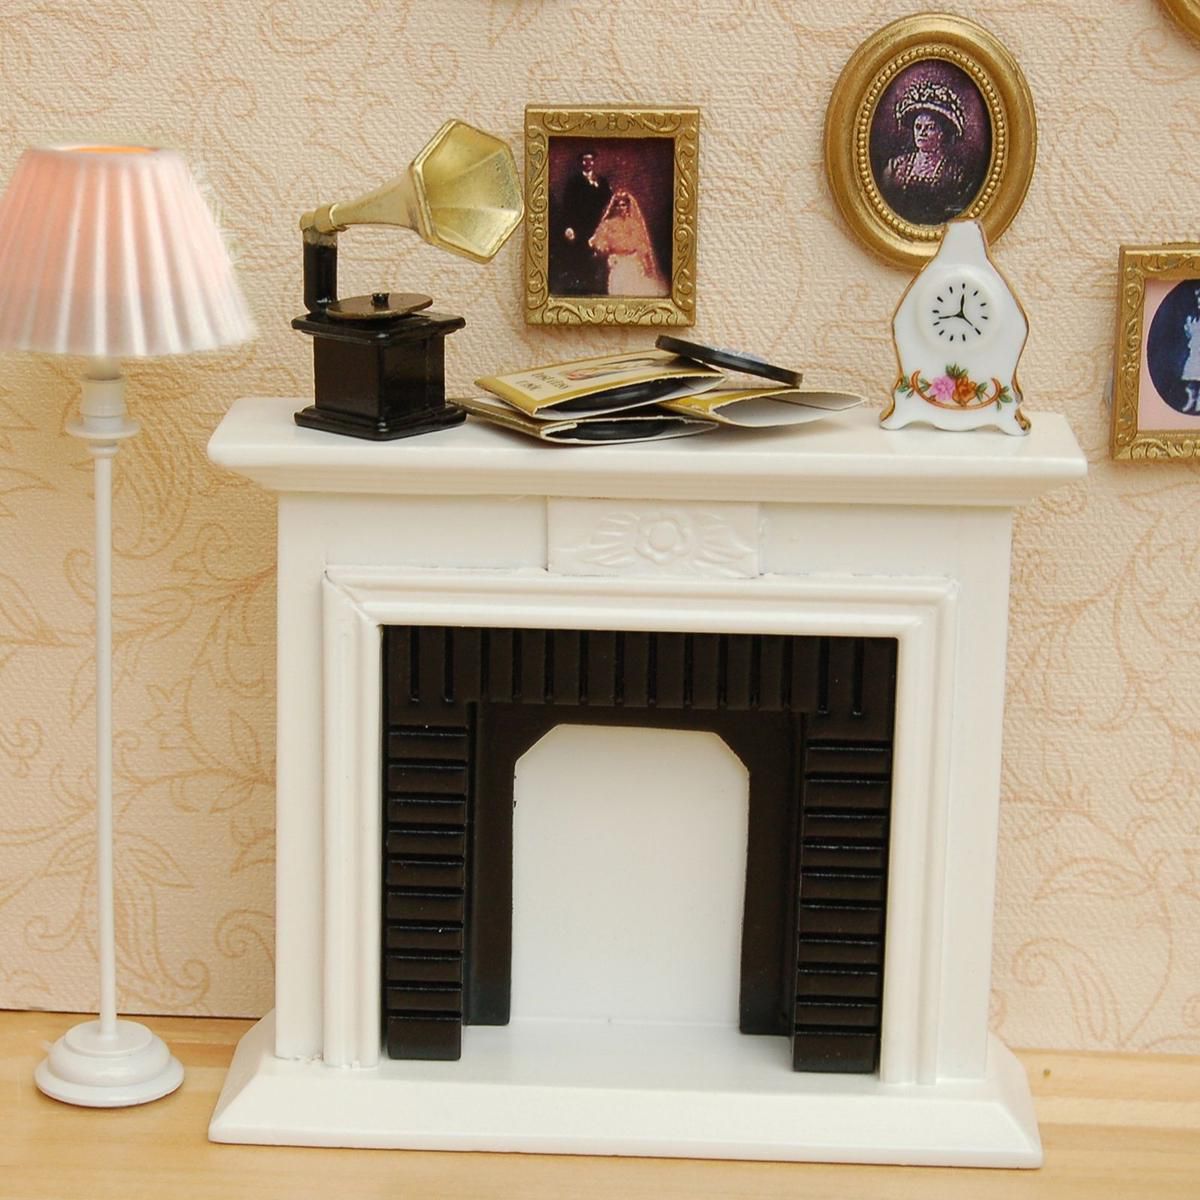 1/12 Scale Miniature White Fireplace Dollhouse Home Decor Furniture Accessories 